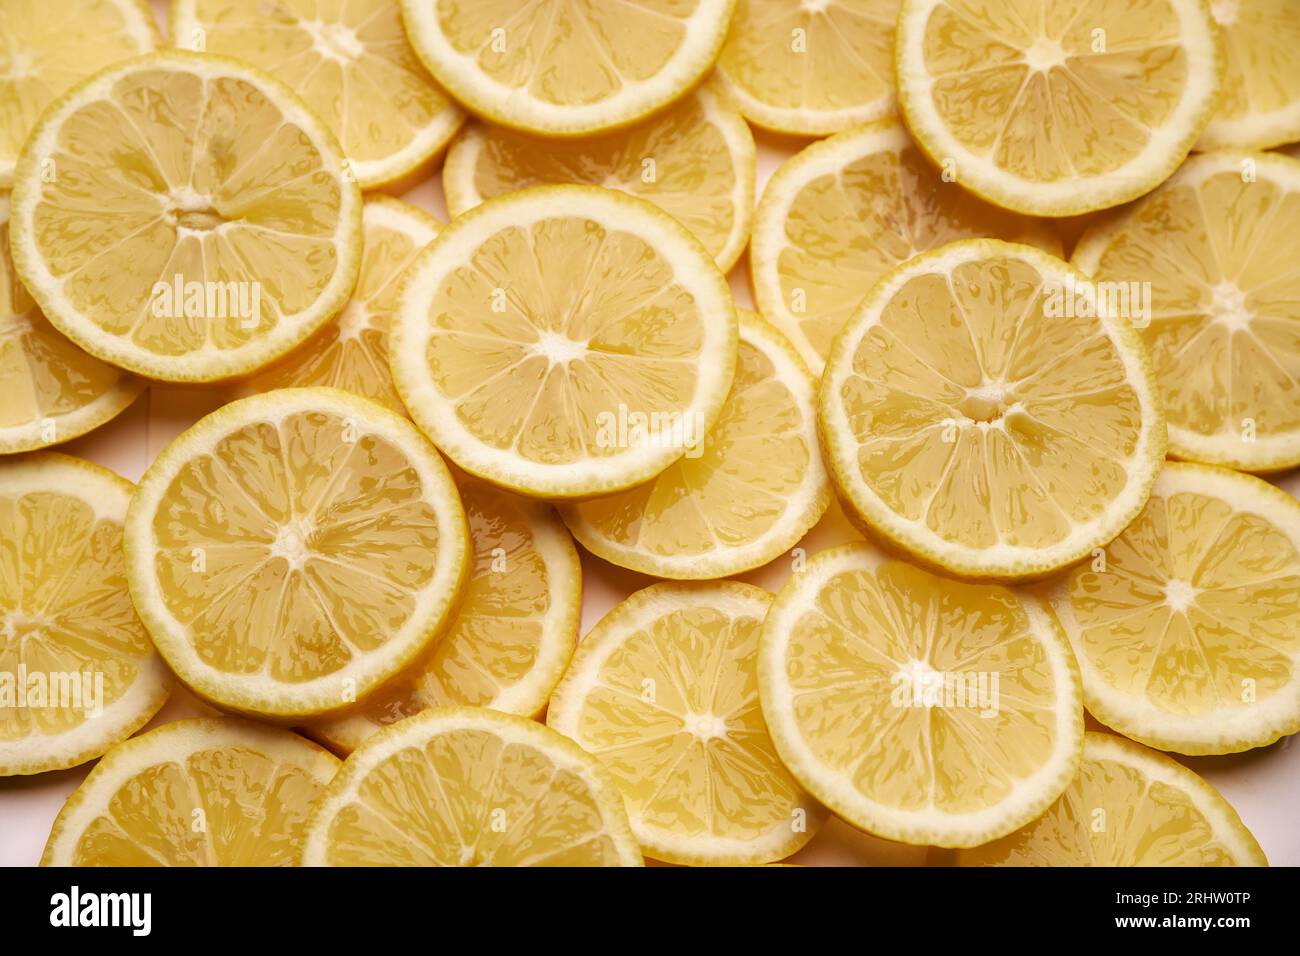 https://c8.alamy.com/comp/2RHW0TP/top-down-background-view-made-of-fresh-sliced-organic-lemons-close-up-2RHW0TP.jpg